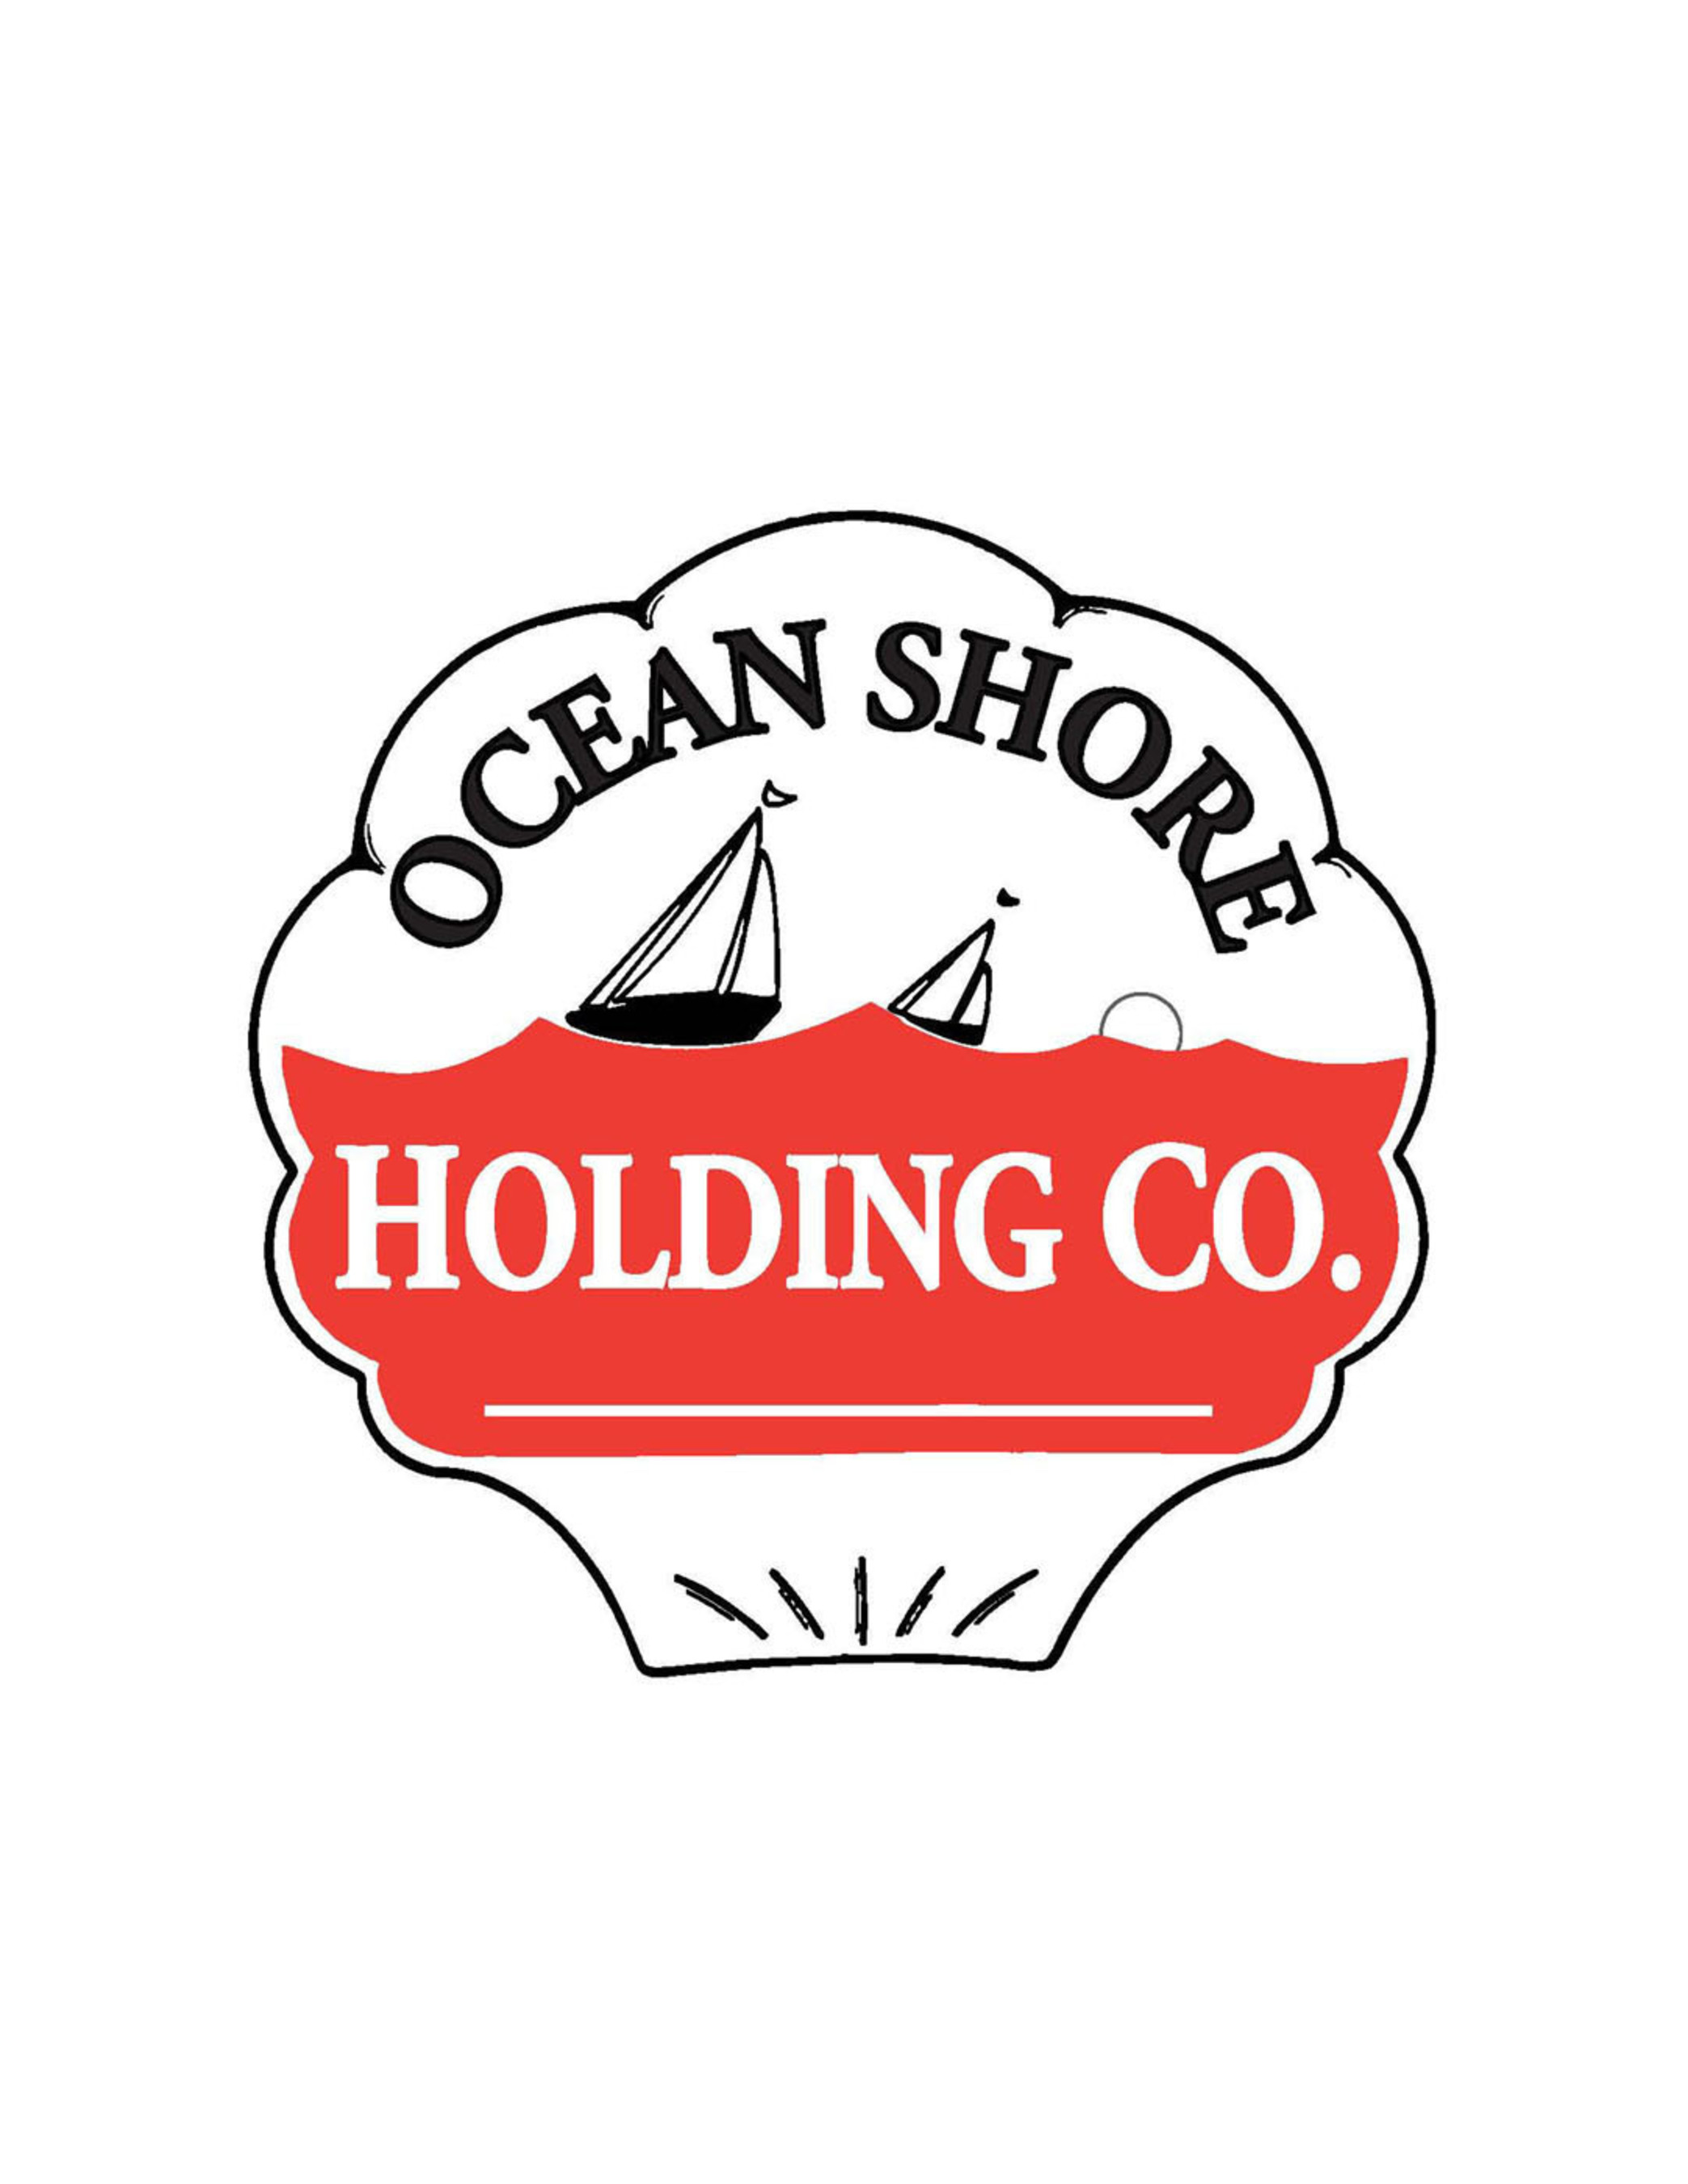 Ocean Shore Holding Co. (PRNewsFoto/Ocean Shore Holding Co.) (PRNewsFoto/OCEAN SHORE HOLDING CO.)